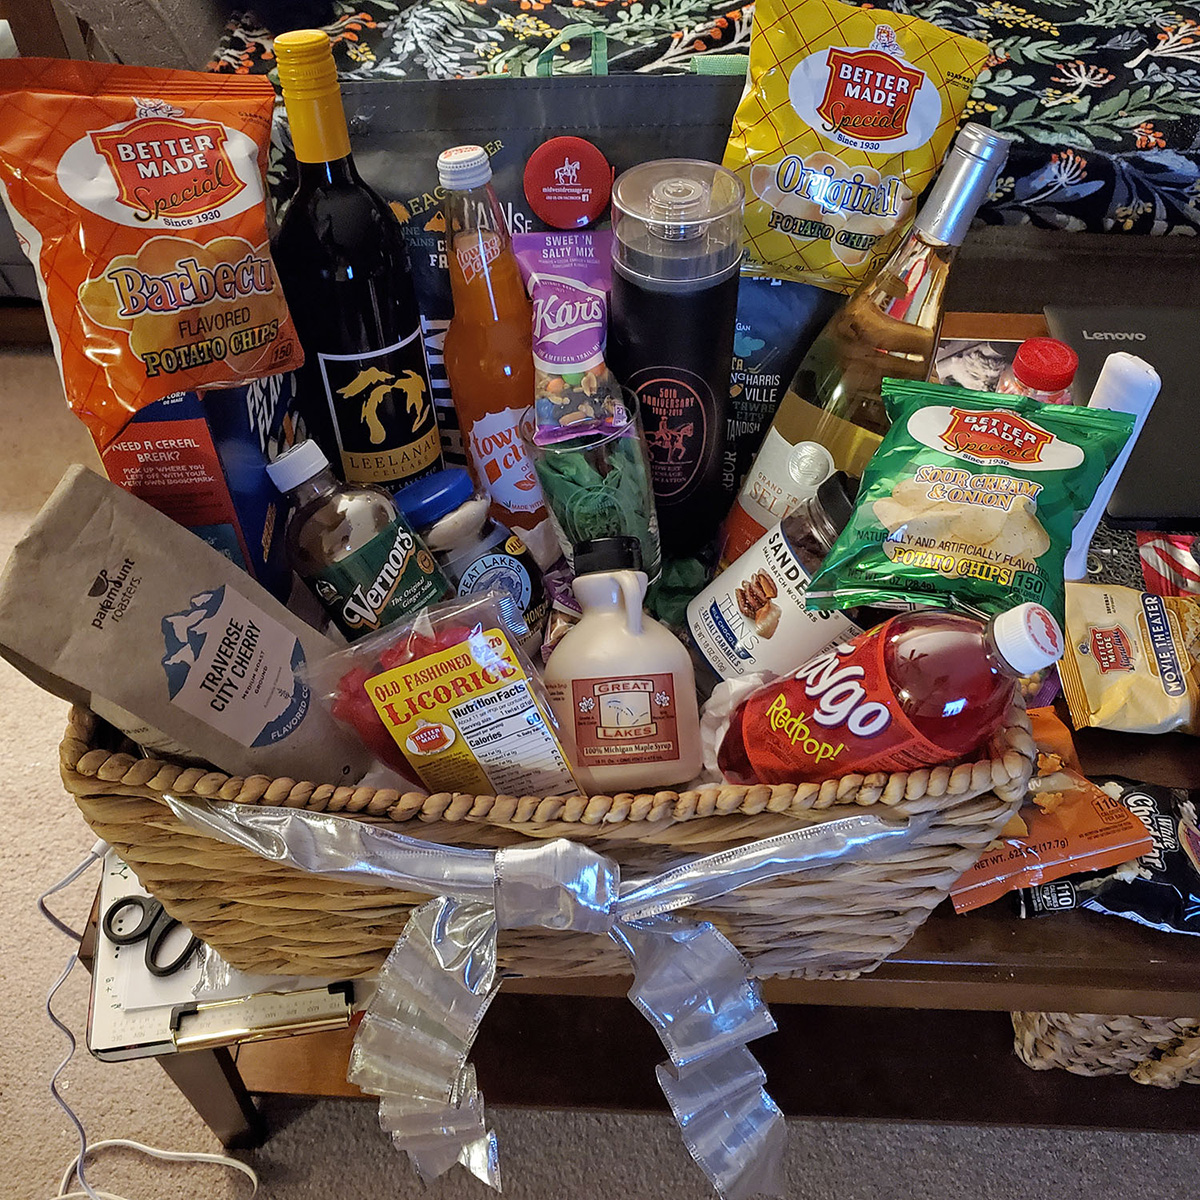 A gift basket